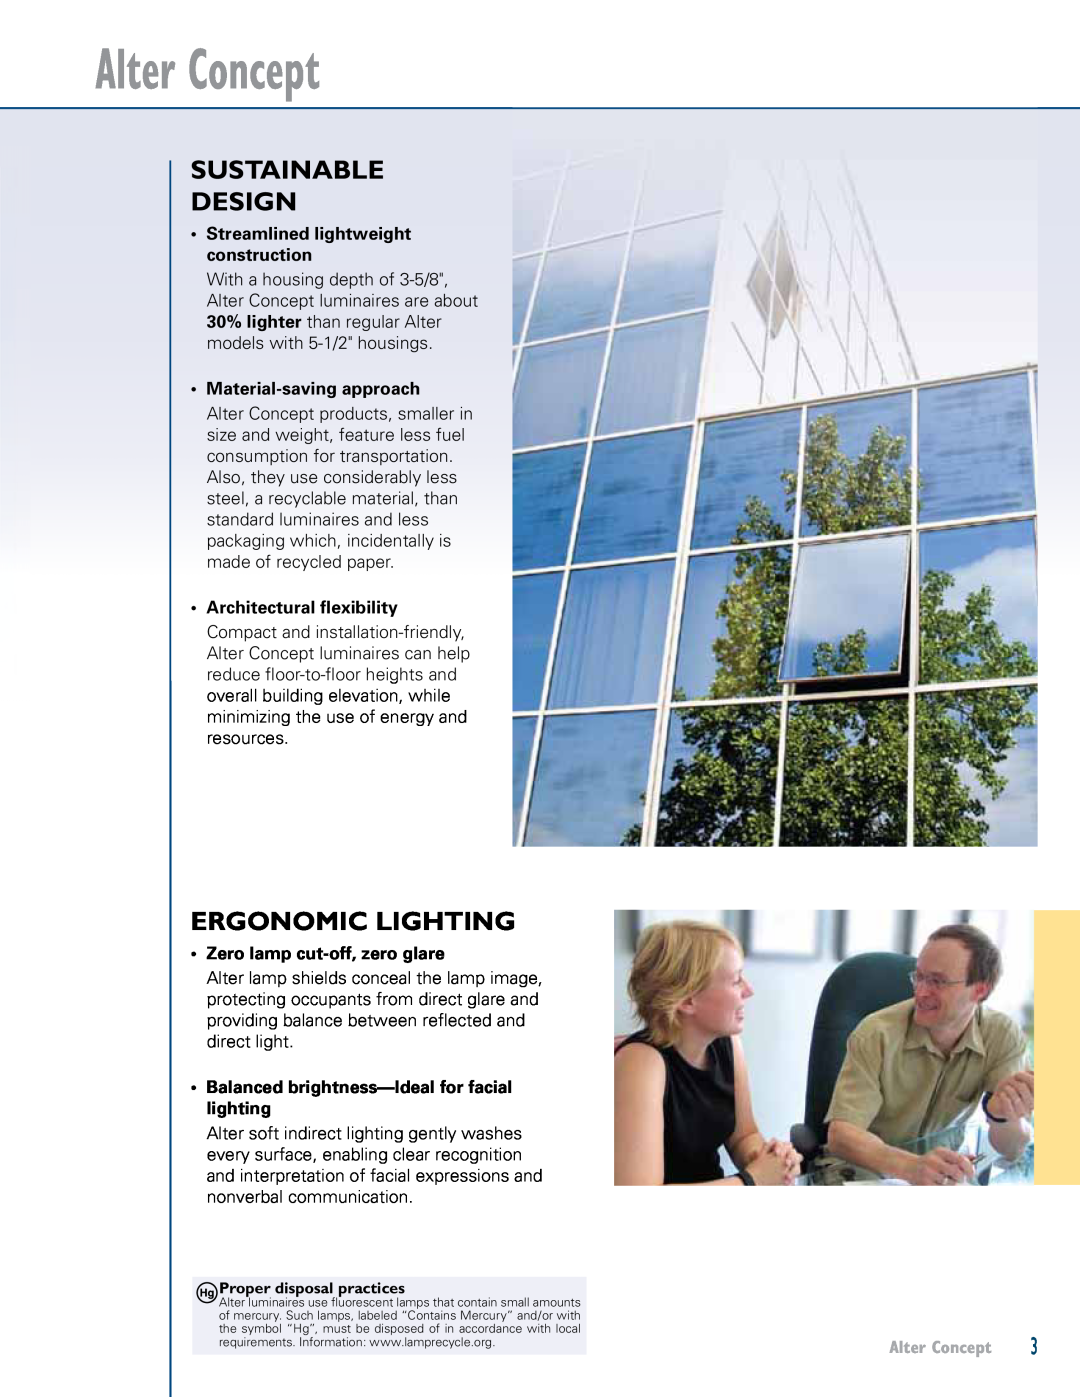 Lightolier LOL99930 manual Sustainable Design, Ergonomic Lighting, Alter Concept, ss-ATERIAL SAVINGLAPPROACH 